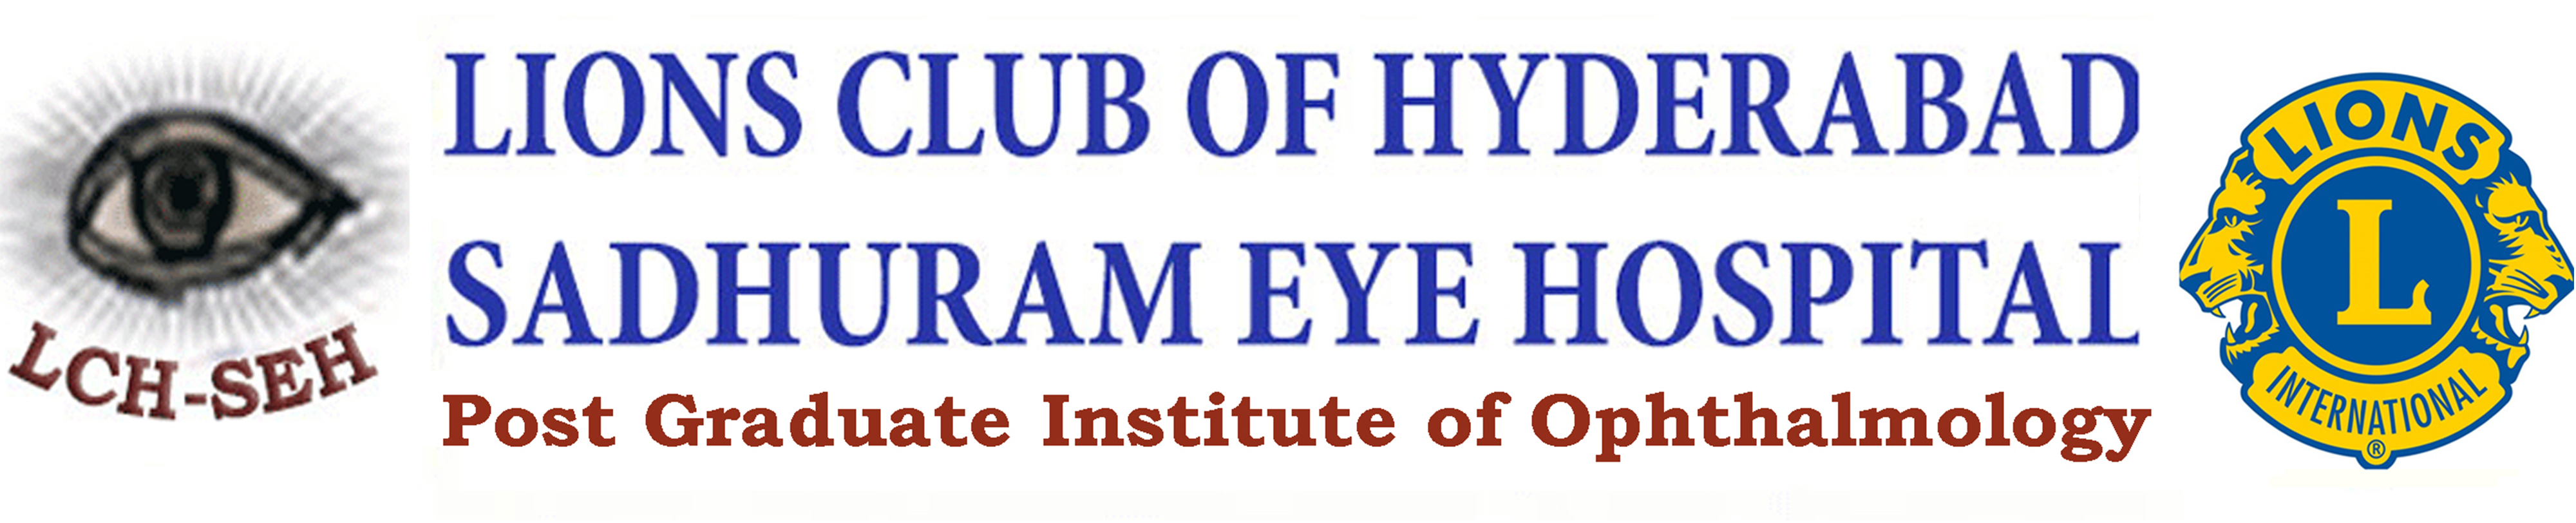 Lions Club of Hyderabad Sadhuram Eye Hospital|Hospitals|Medical Services